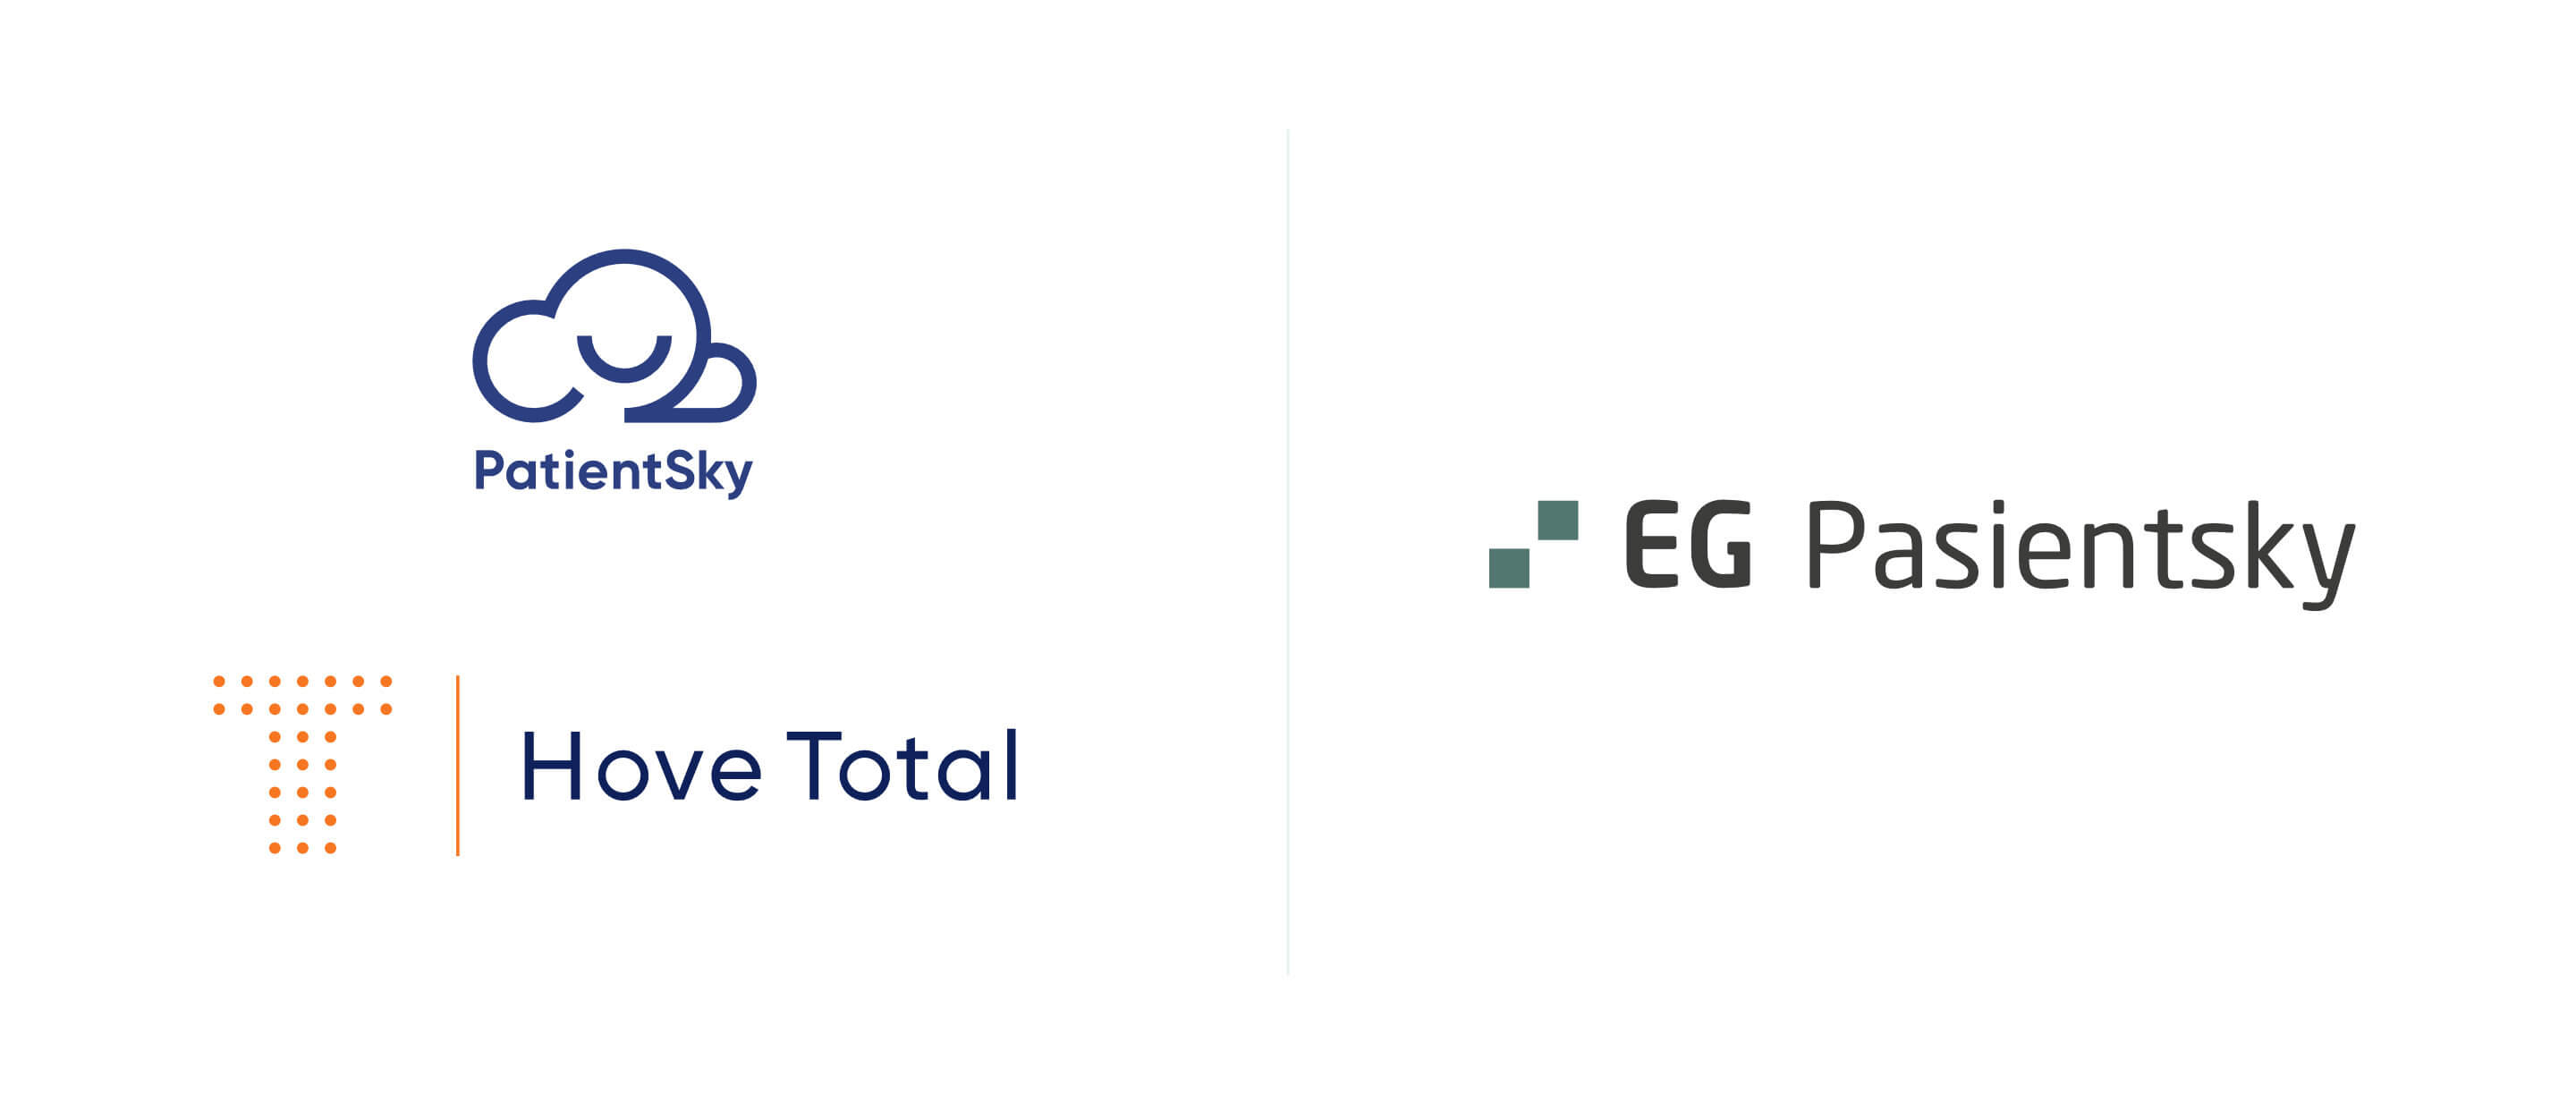 EG-Pasientsky-product-logos.jpg